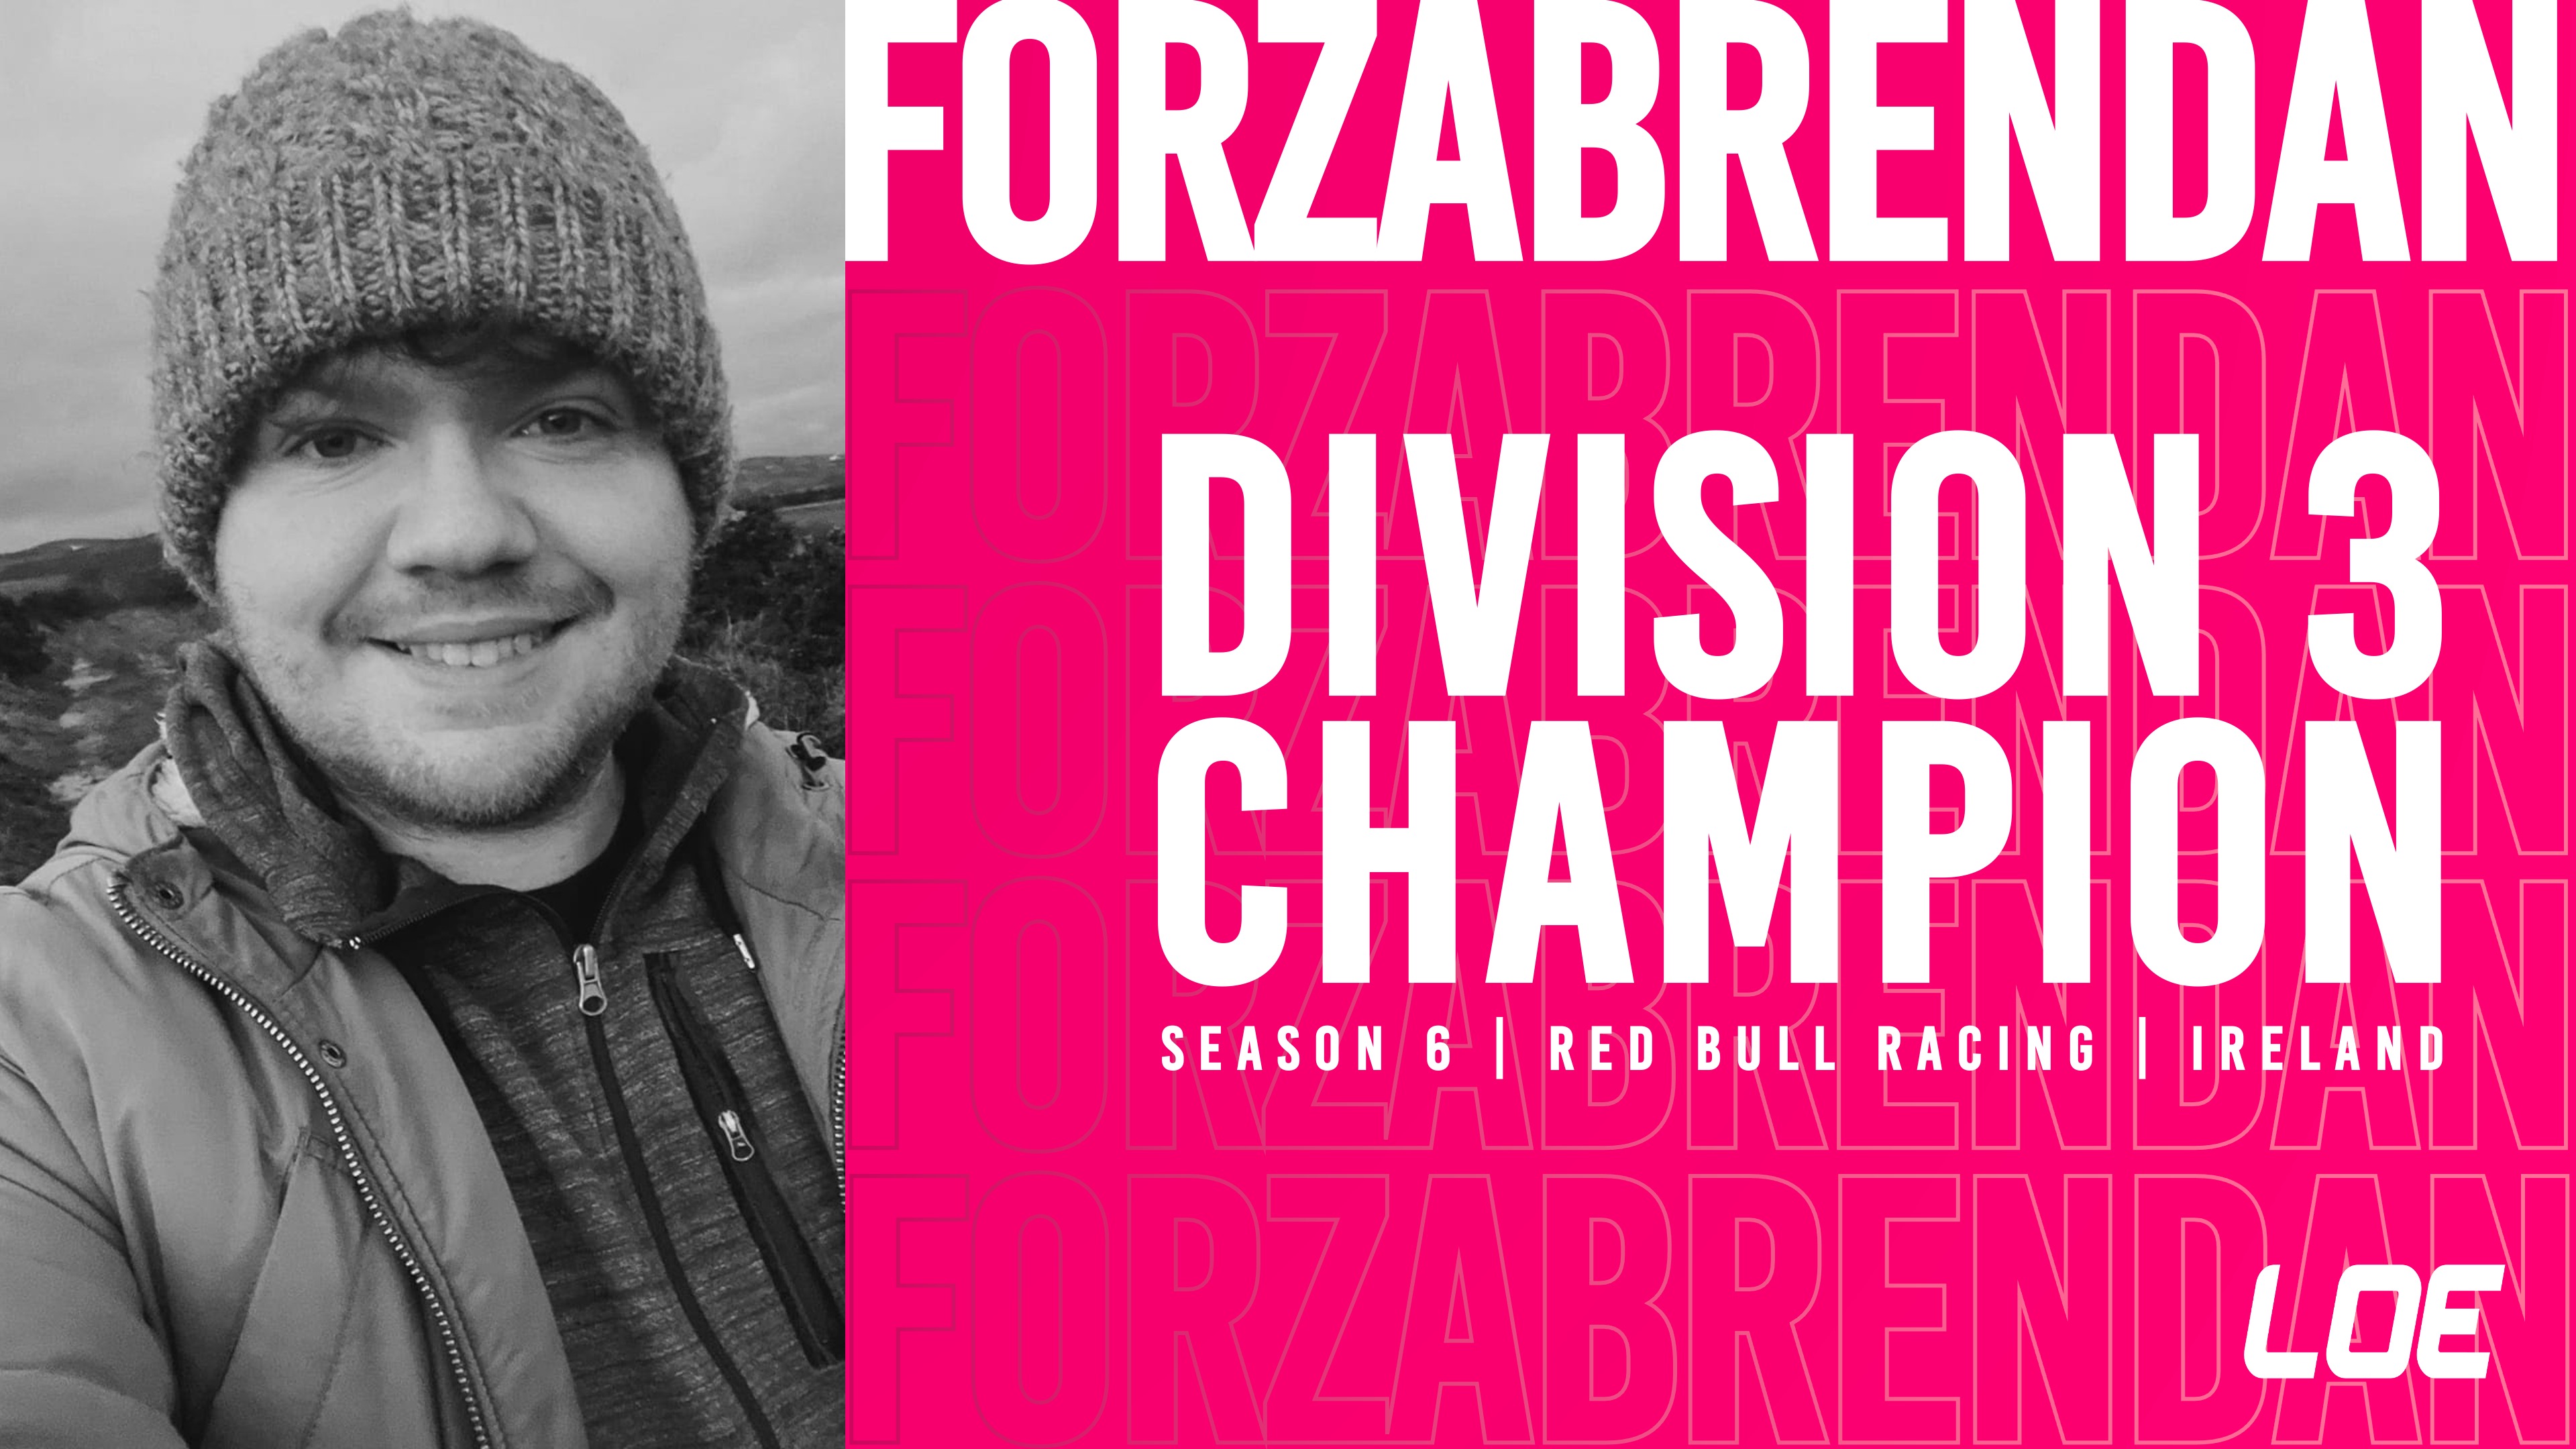 Division 3 Champion - REL_ForzaBrendan